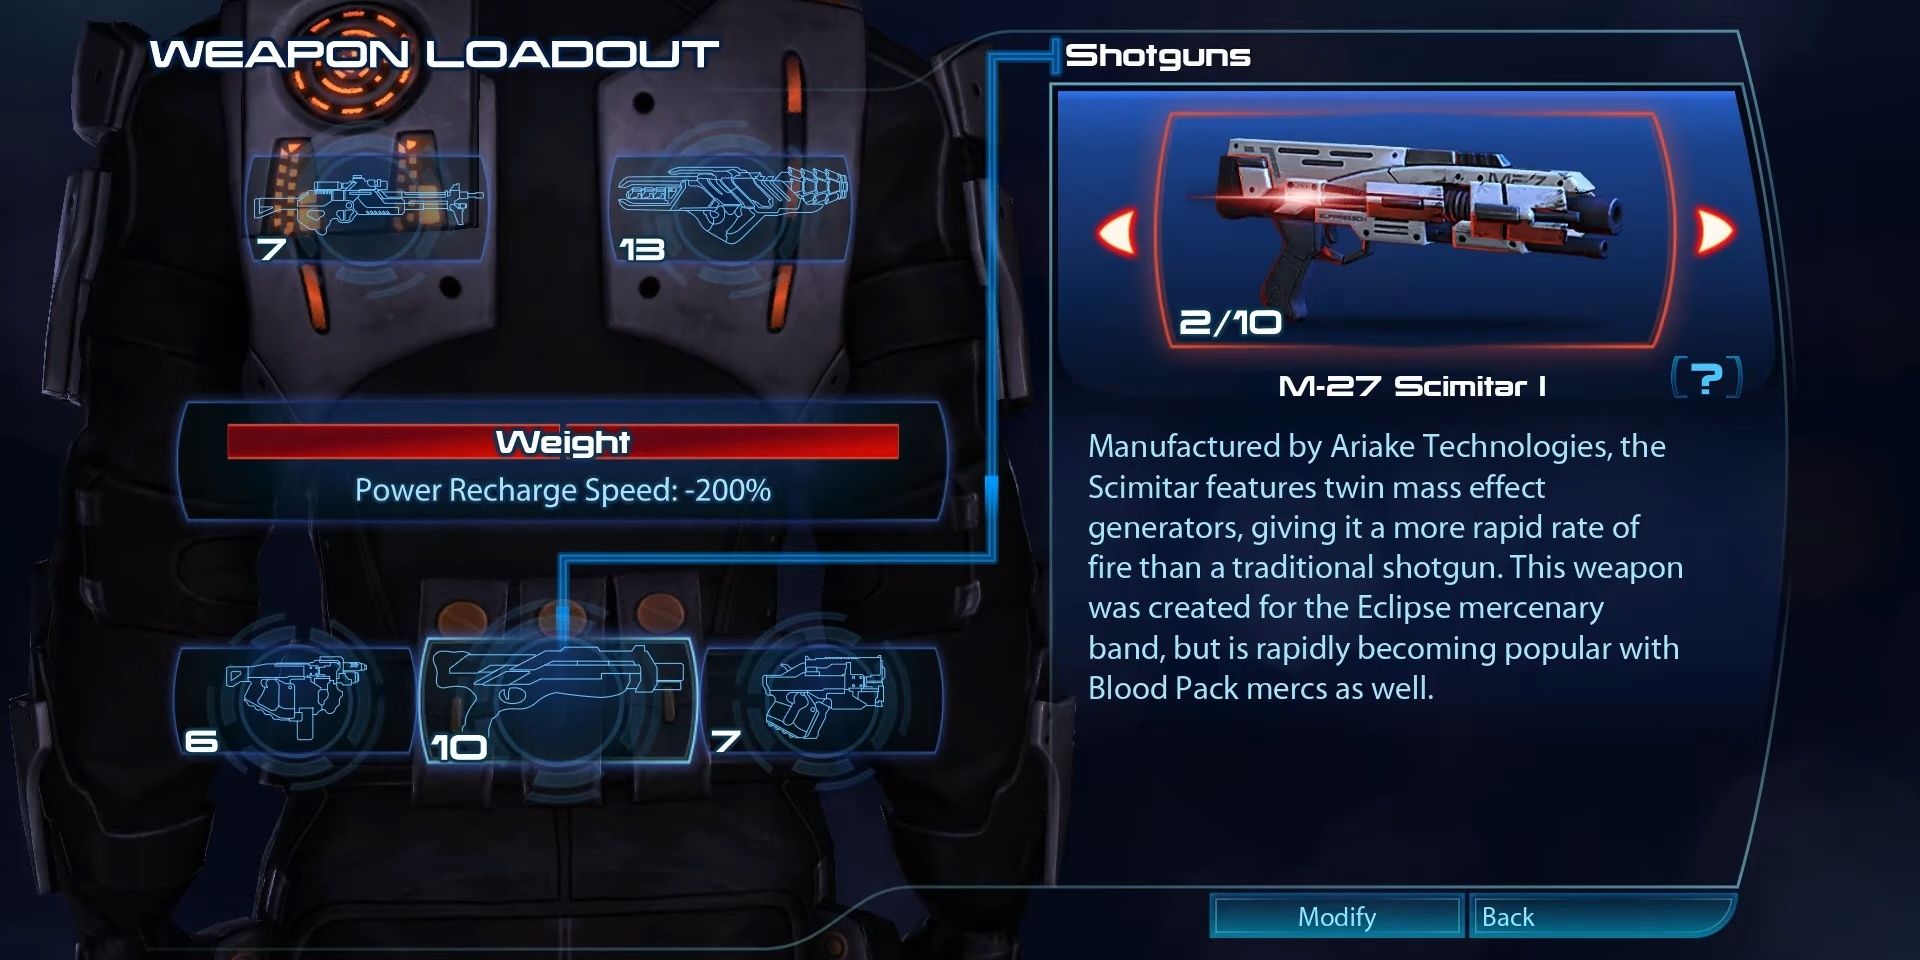 M-27 Scimitar From Mass Effect 3